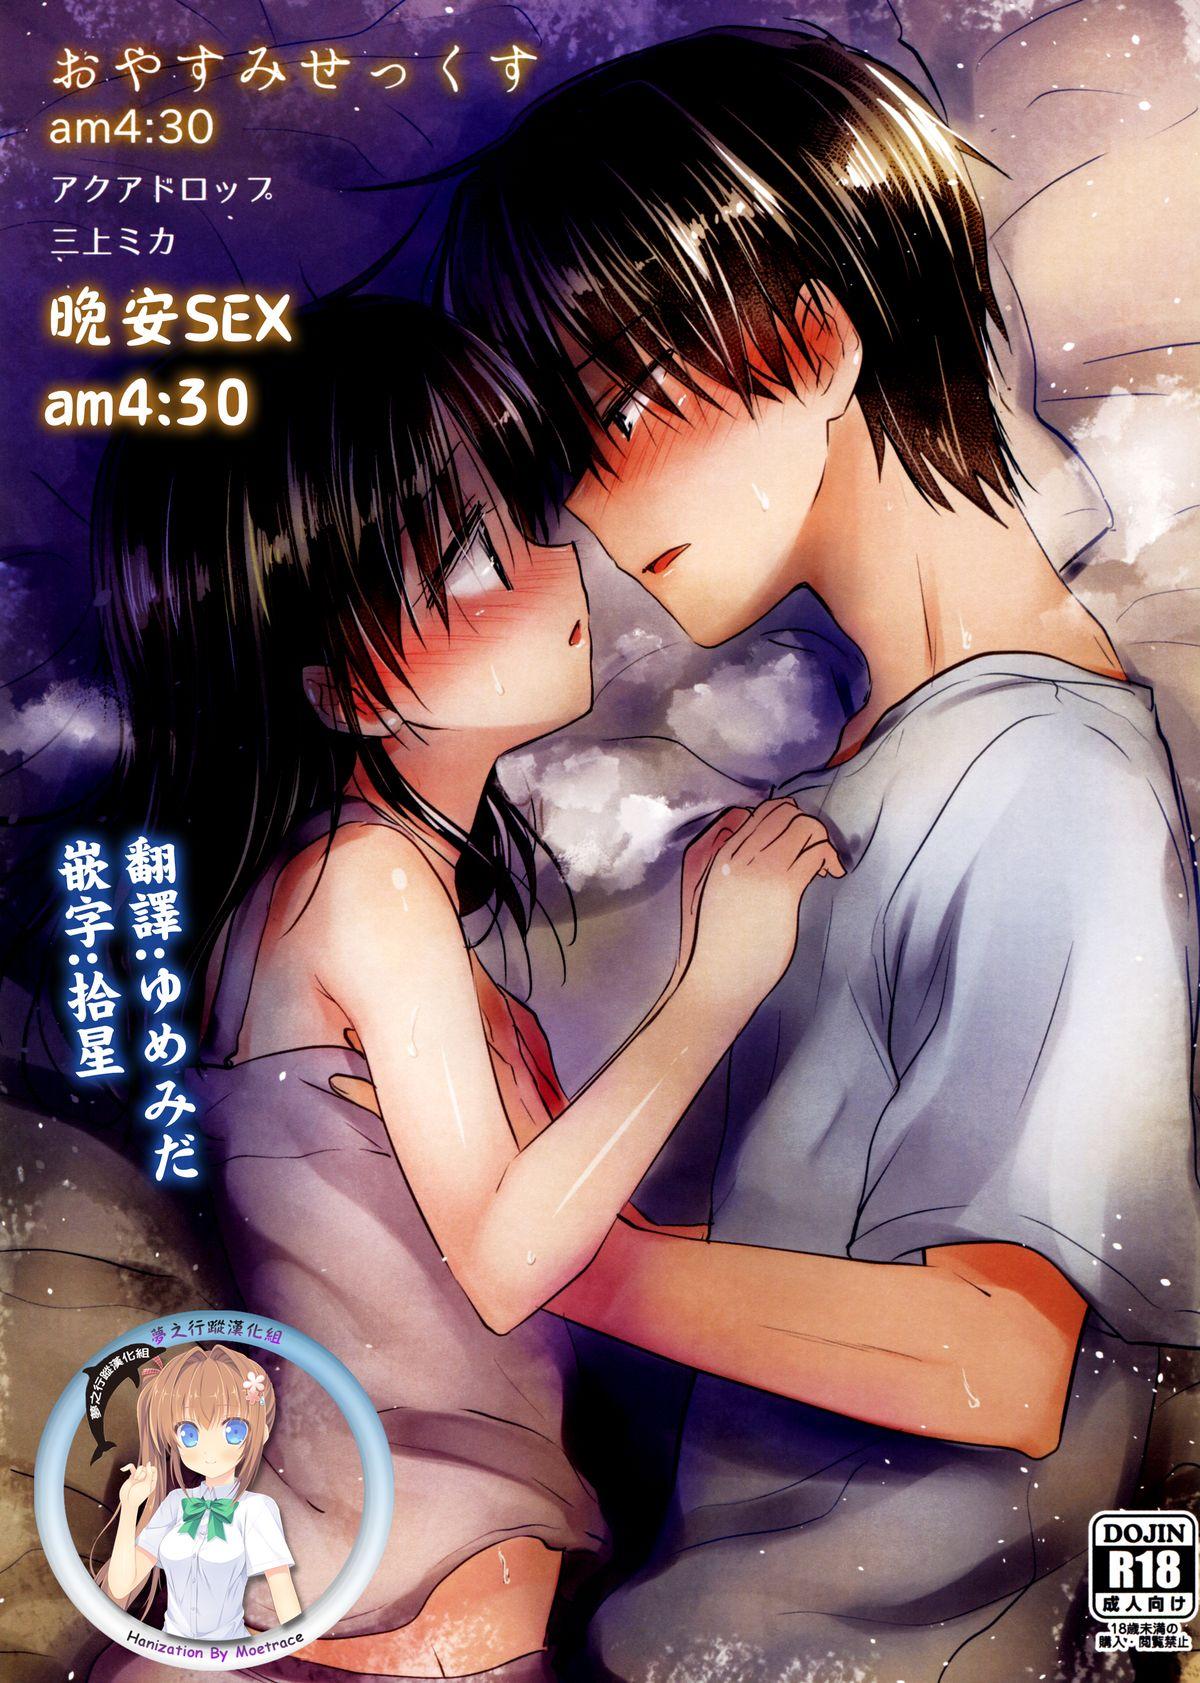 Nice Oyasumi Sex am4:30 | 晚安SEX am4:30 Closeup - Page 1